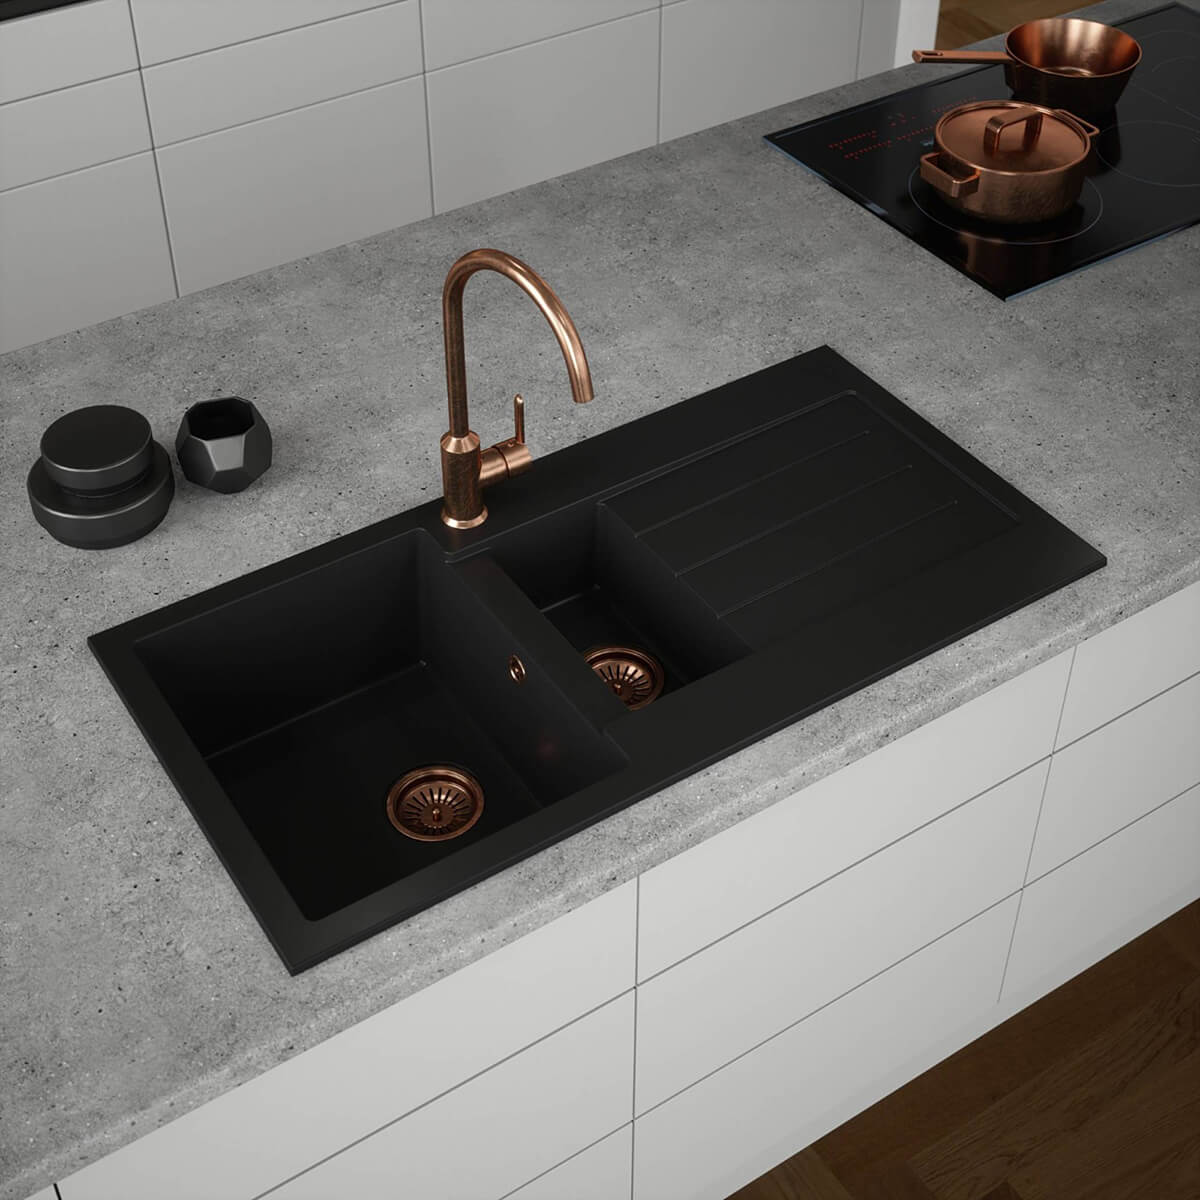 Ellsi Comite Granite 1.5 Bowl Kitchen Sink & Waste - Black (11258)